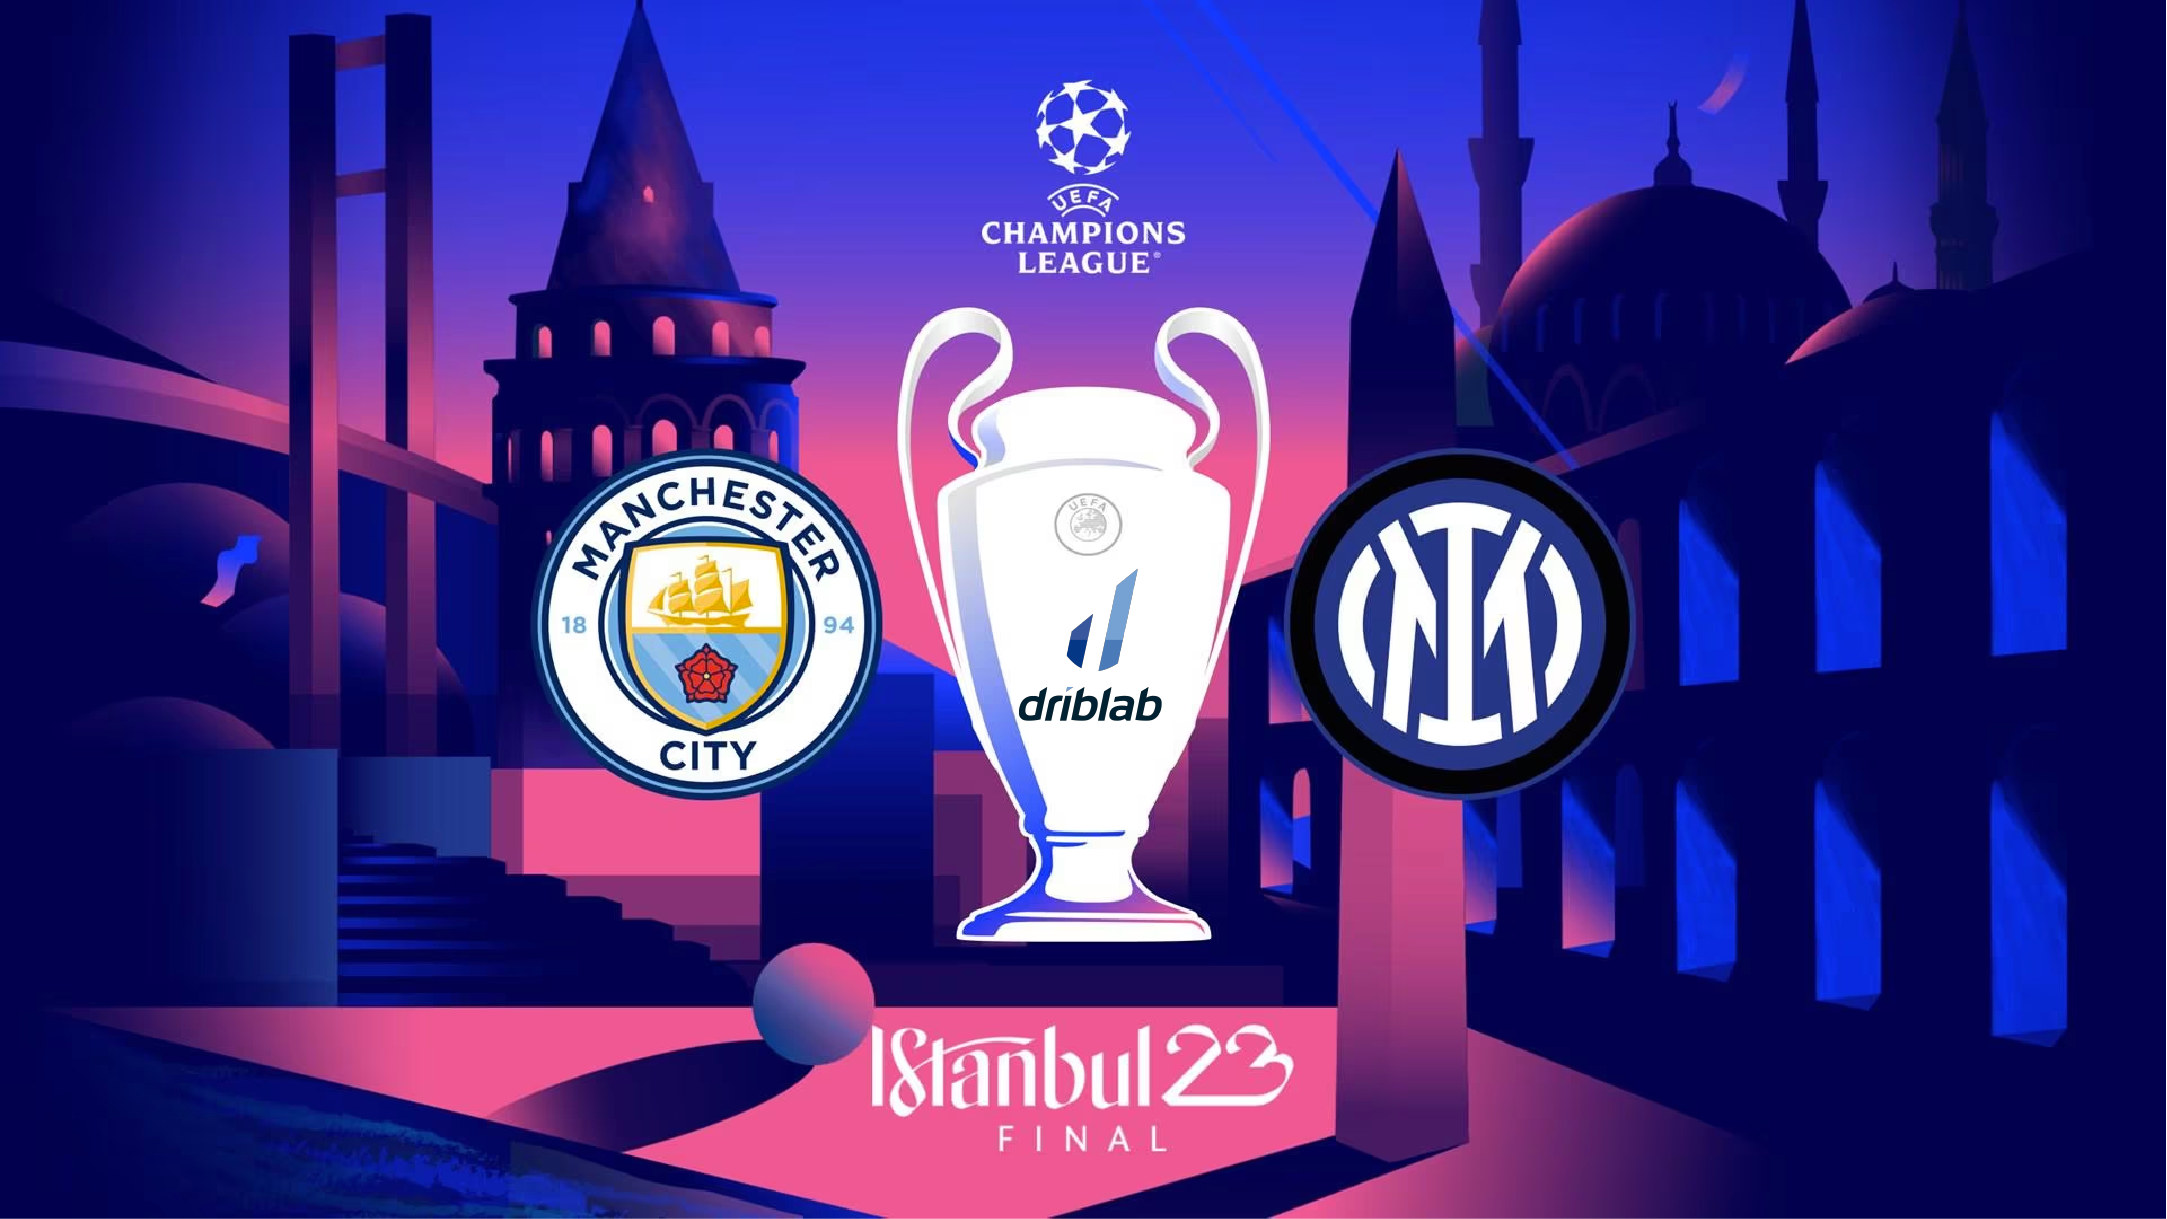 Champions League Final 22/23: Manchester City vs Inter Milan - Driblab